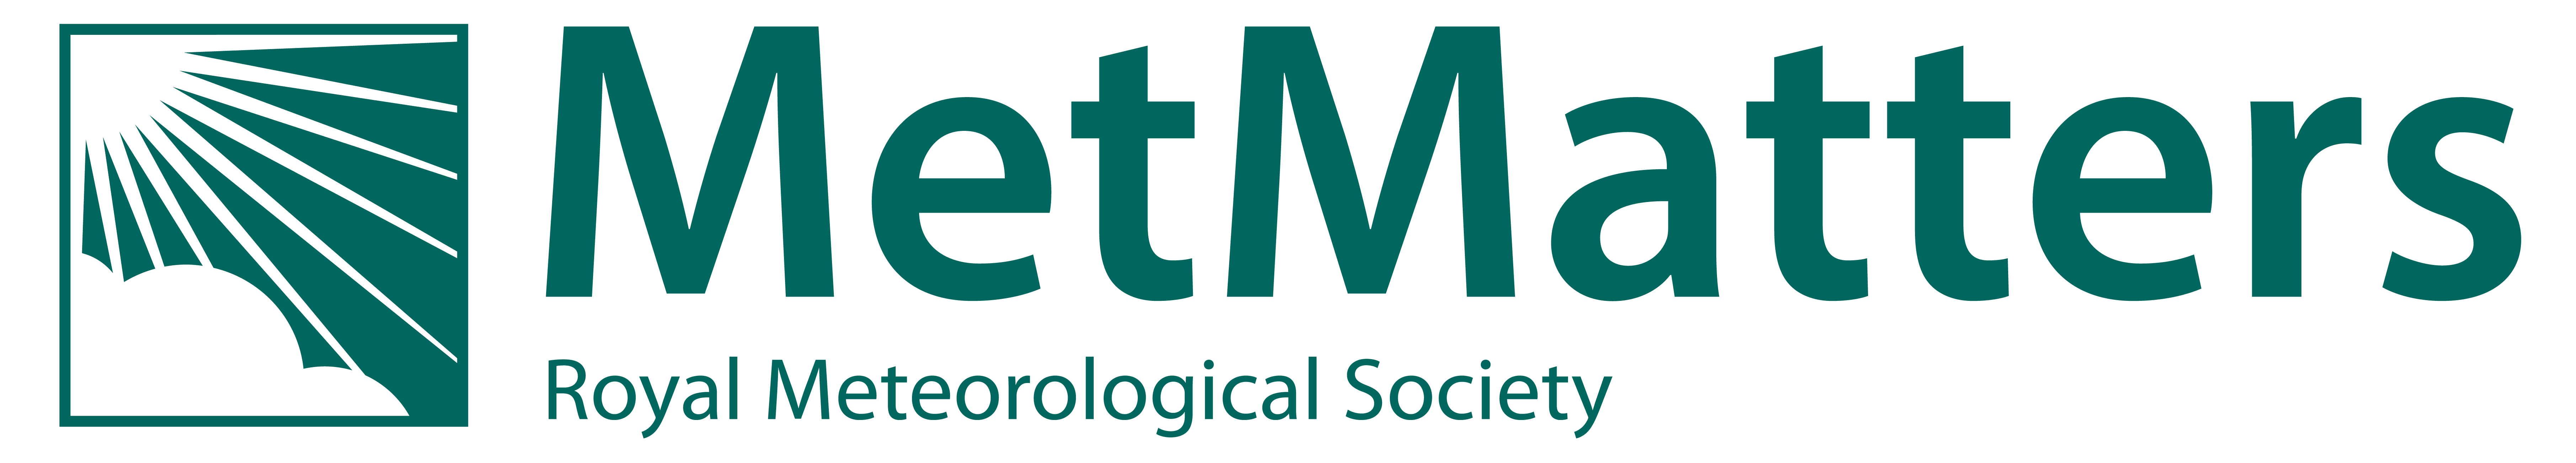 MetMatters logo